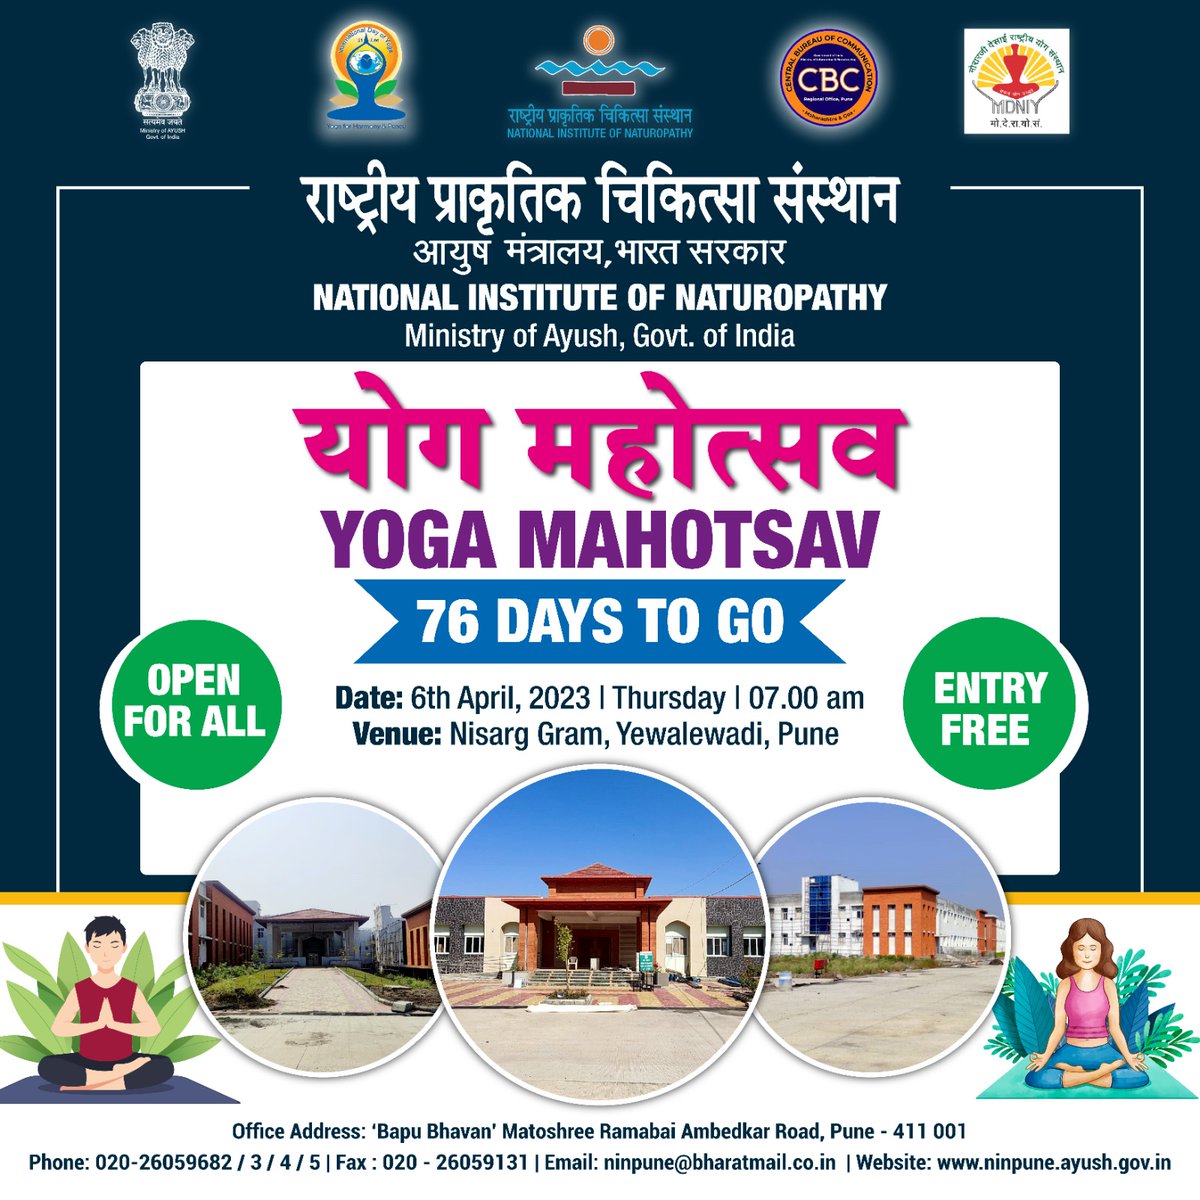 Yoga Mahotsav 2023, 76 days to International Day of Yoga. Come be a part of this mass yoga demonstration at Nisarg Gram, Yewalewadi, Pune
Date - 6 April
Time- 7 am
#IDY2023 #YogaMahotsav